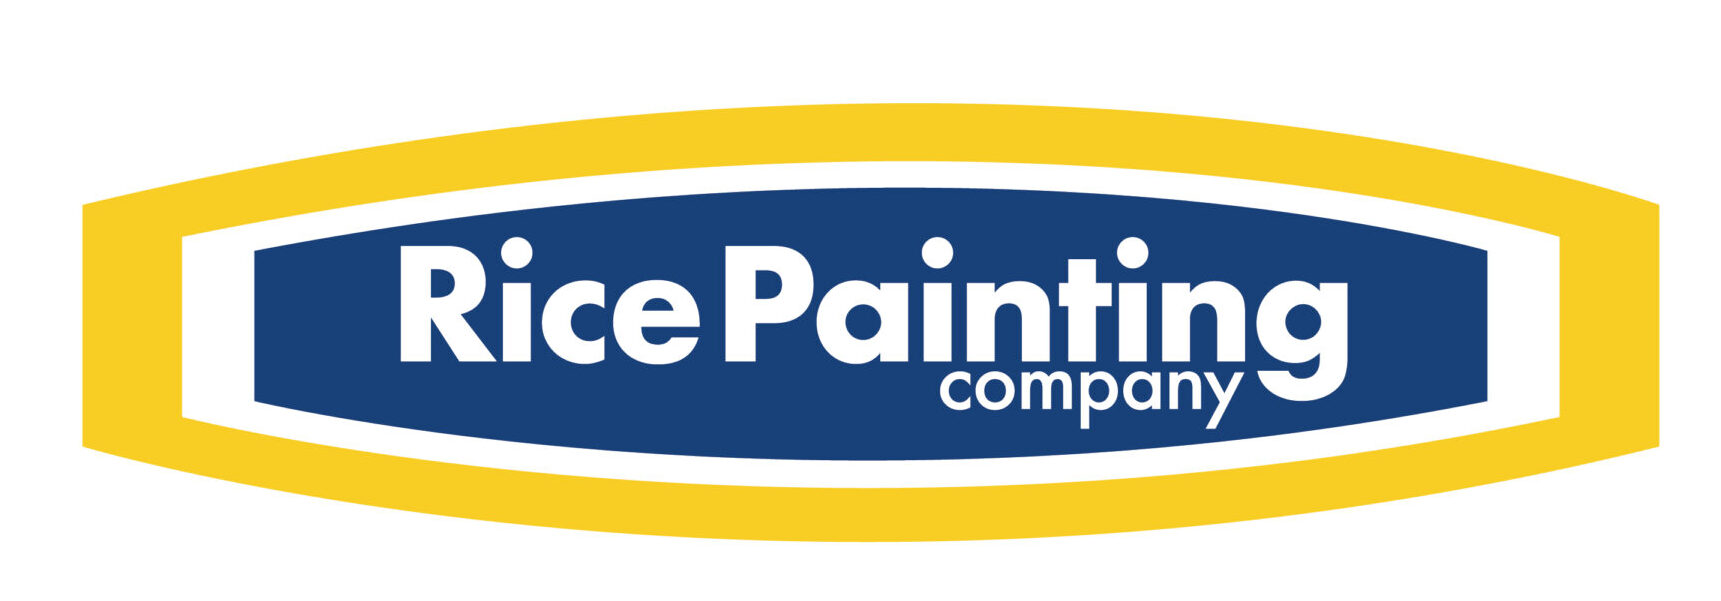 Rice Painting Company